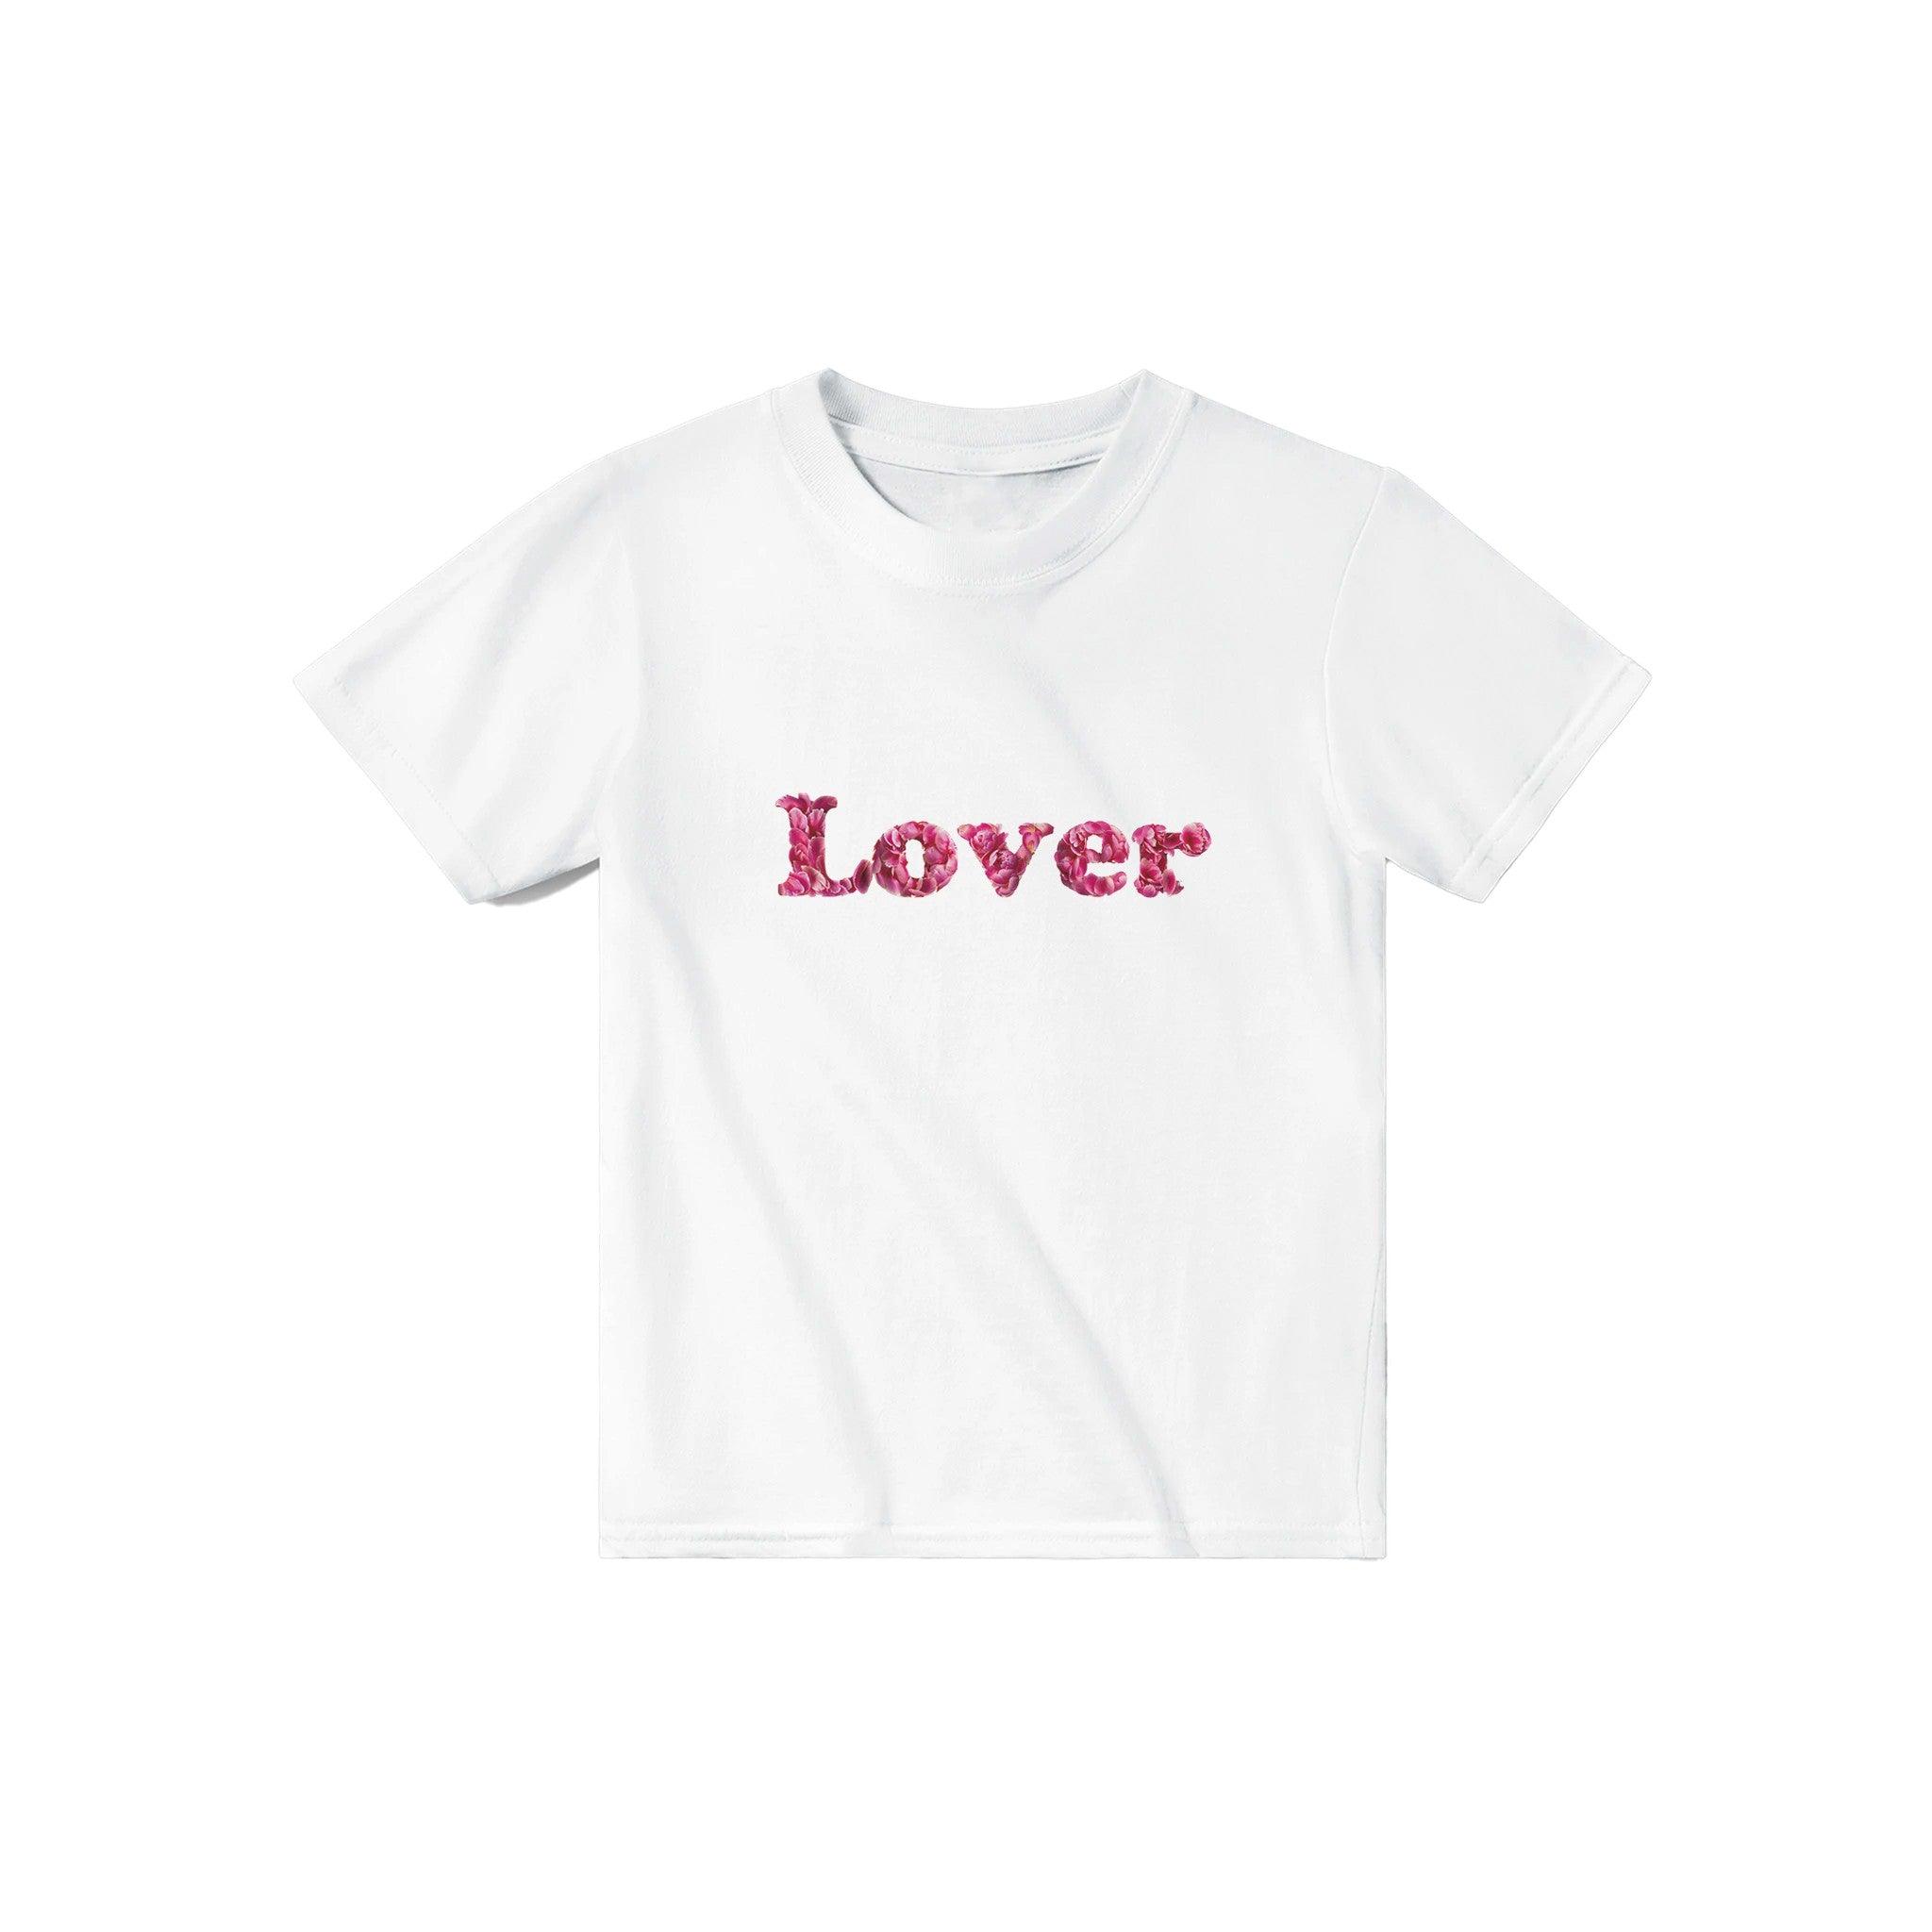 'Lover' Baby Tee - POMA